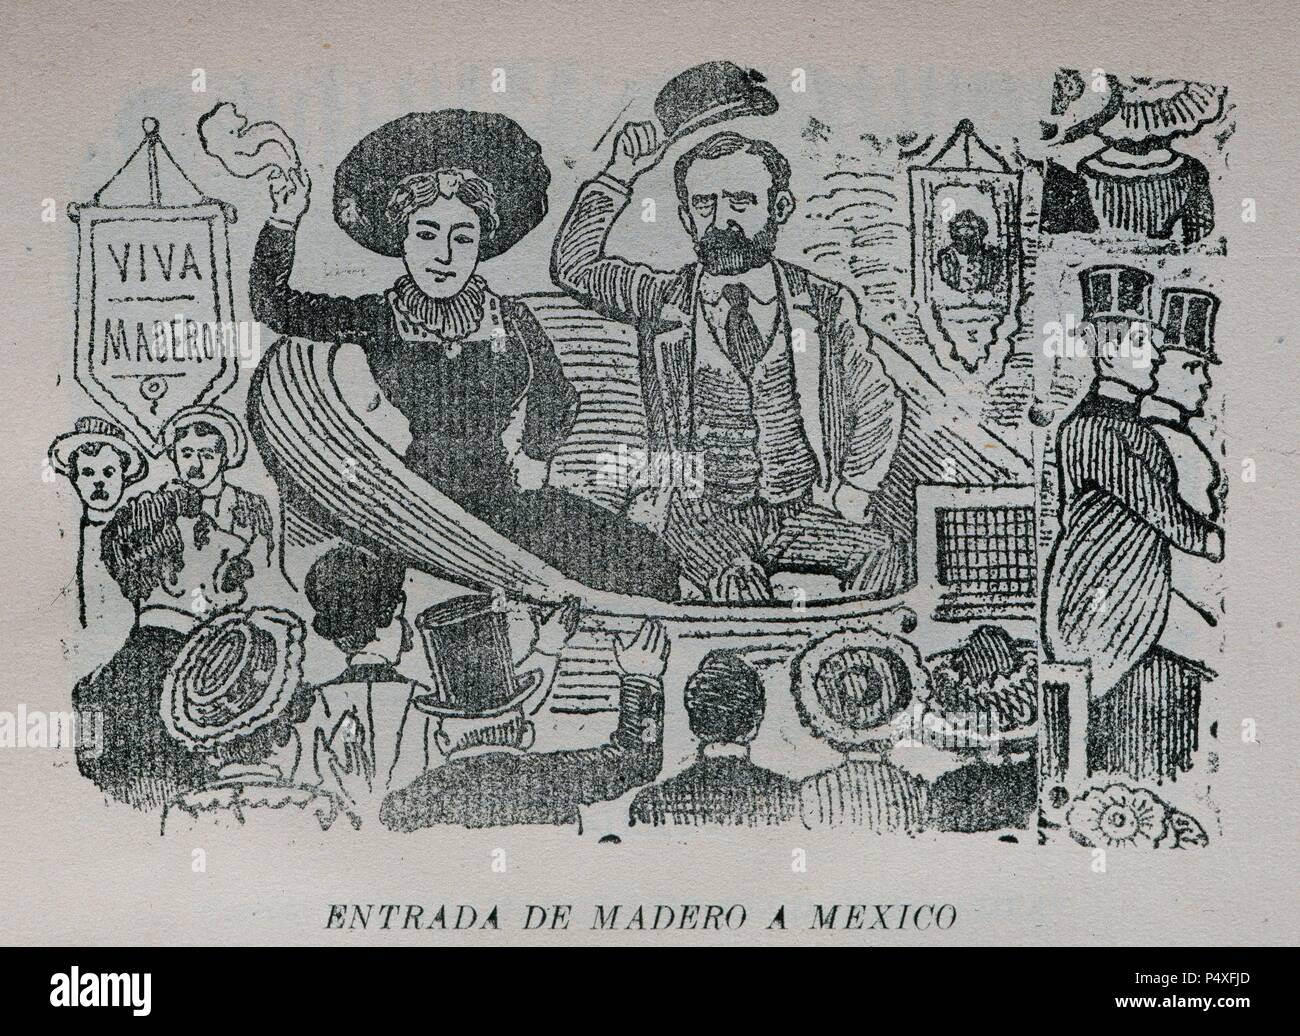 Francisco Madero (1873-1913). Mexican politician. Madero's entry to Mexico as a president. Engraving by Jose Guadalupe Posada, mexican engraver. Stock Photo